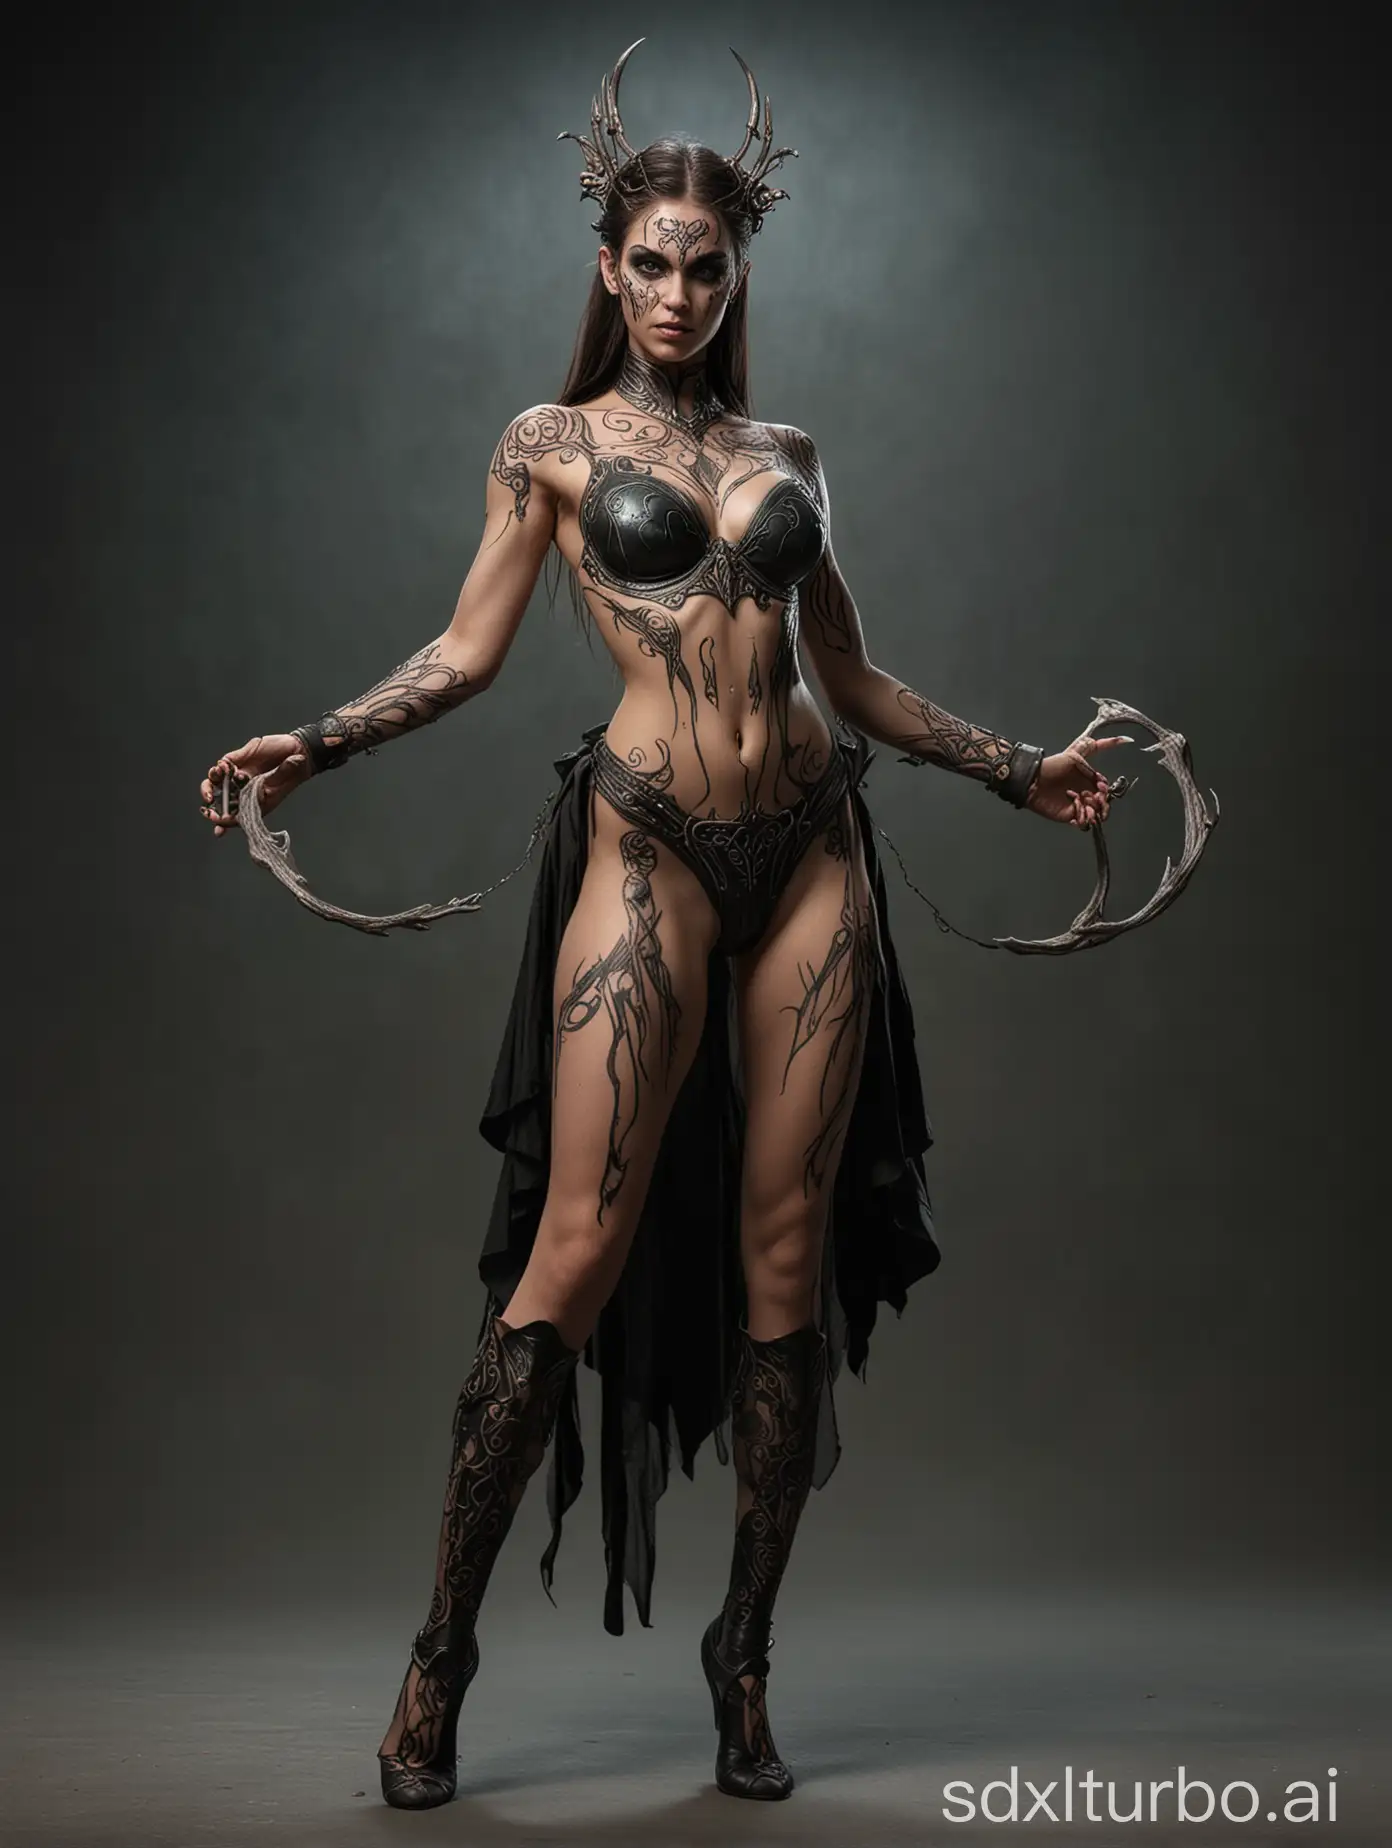 half-naked, body art, female, enchantress, action pose, full body, flat background, dark fantasy